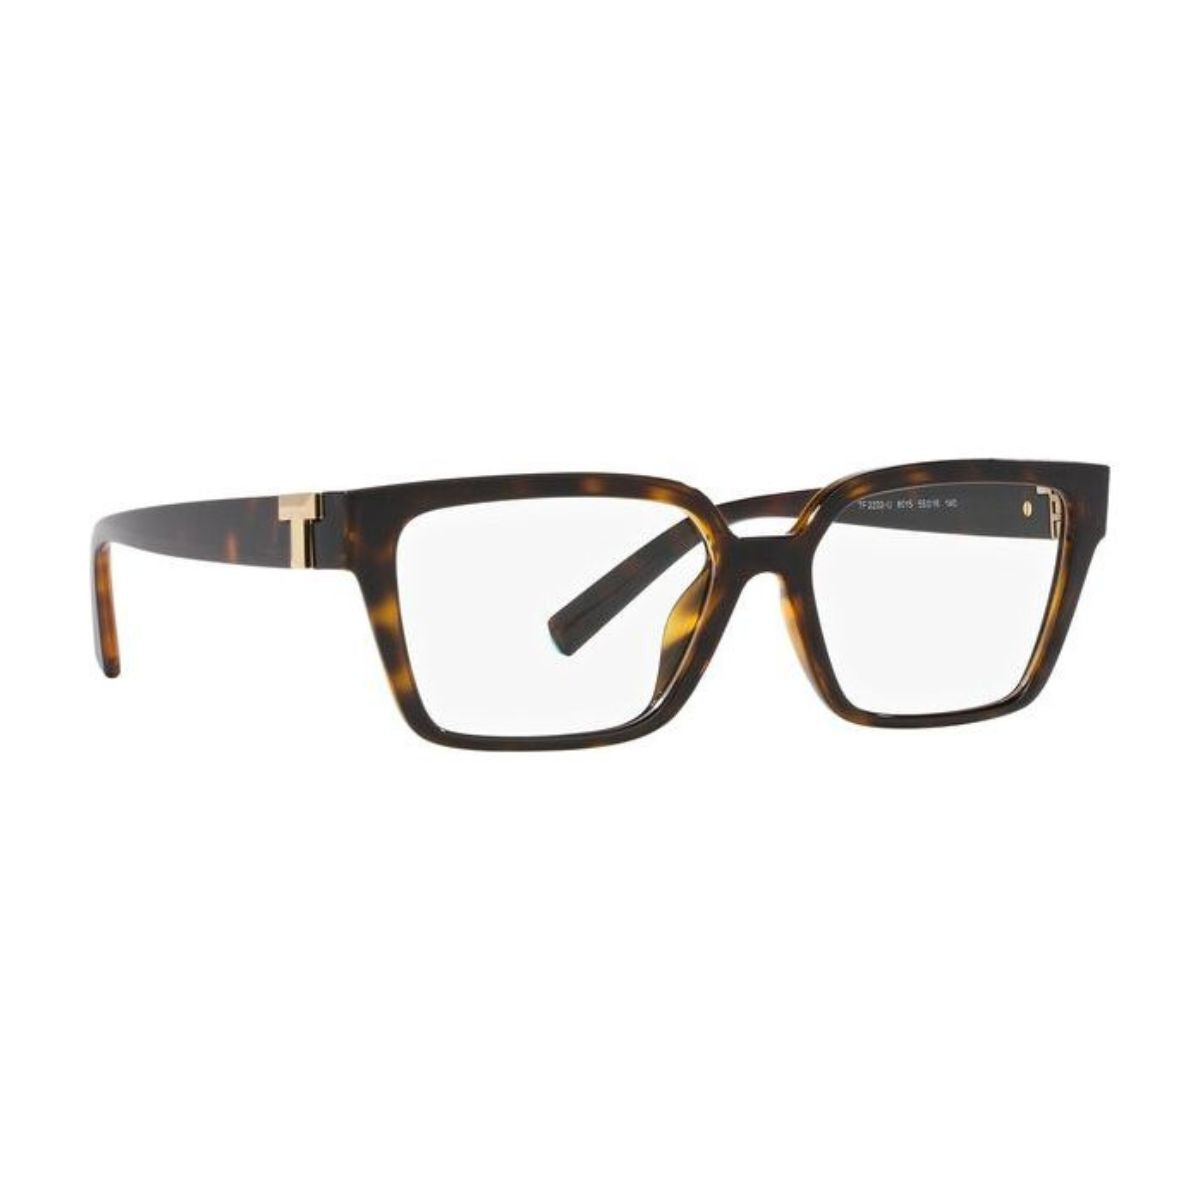 "Buy Online Tiffany & Co 2232-U 8015 Optical Eyewear Glasses Frame For Women's At Optorium"